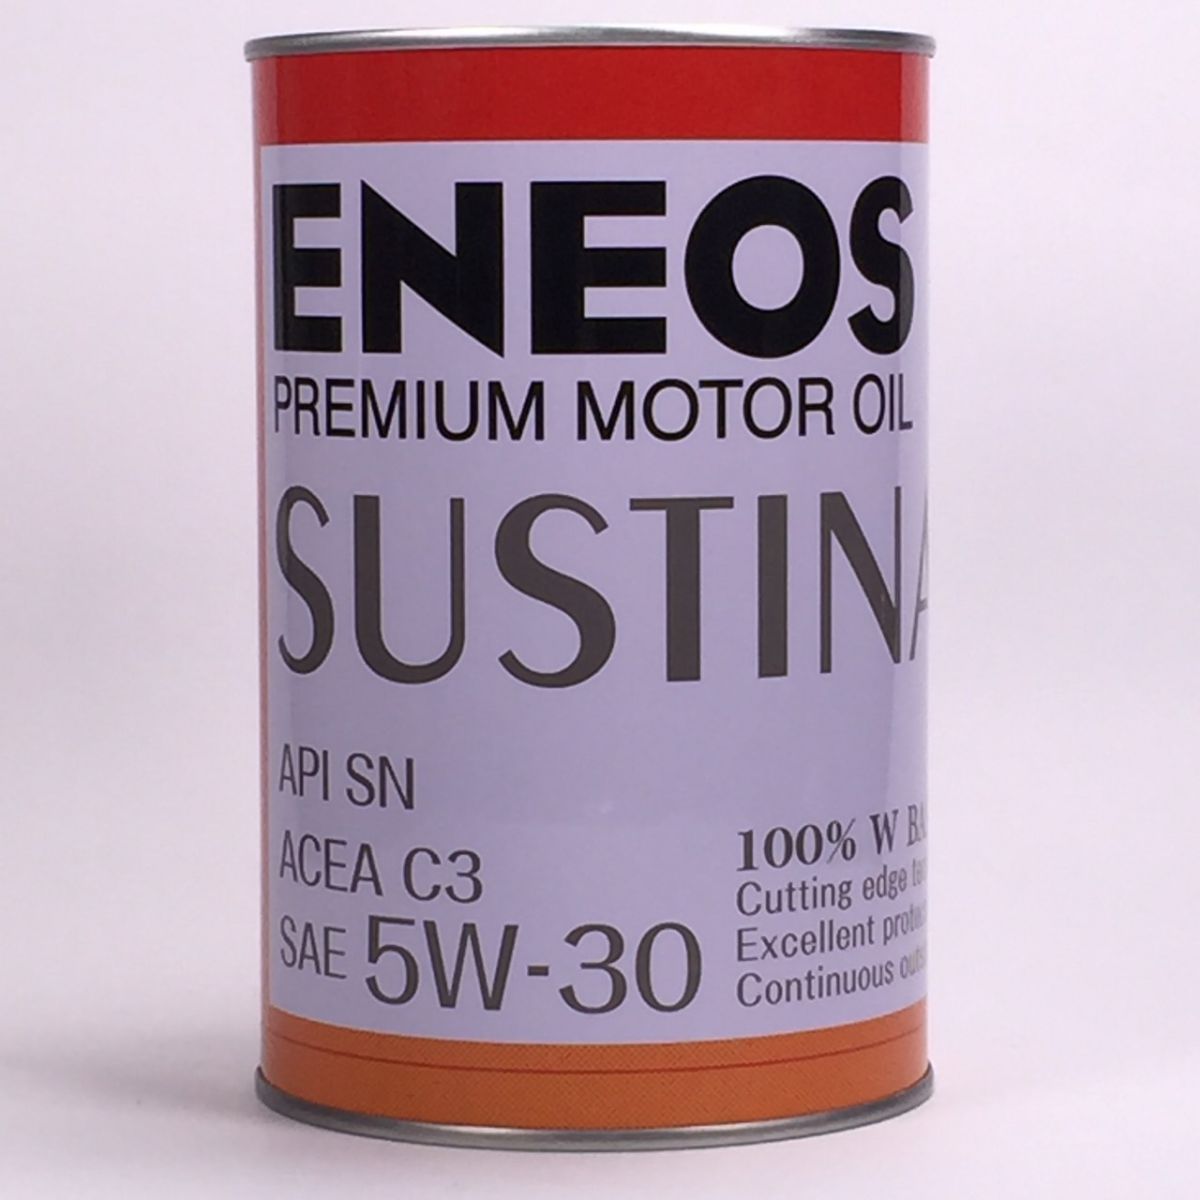 ENEOS SUSTINA 5W-30 全合成機油 台灣公司貨 圓鐵罐